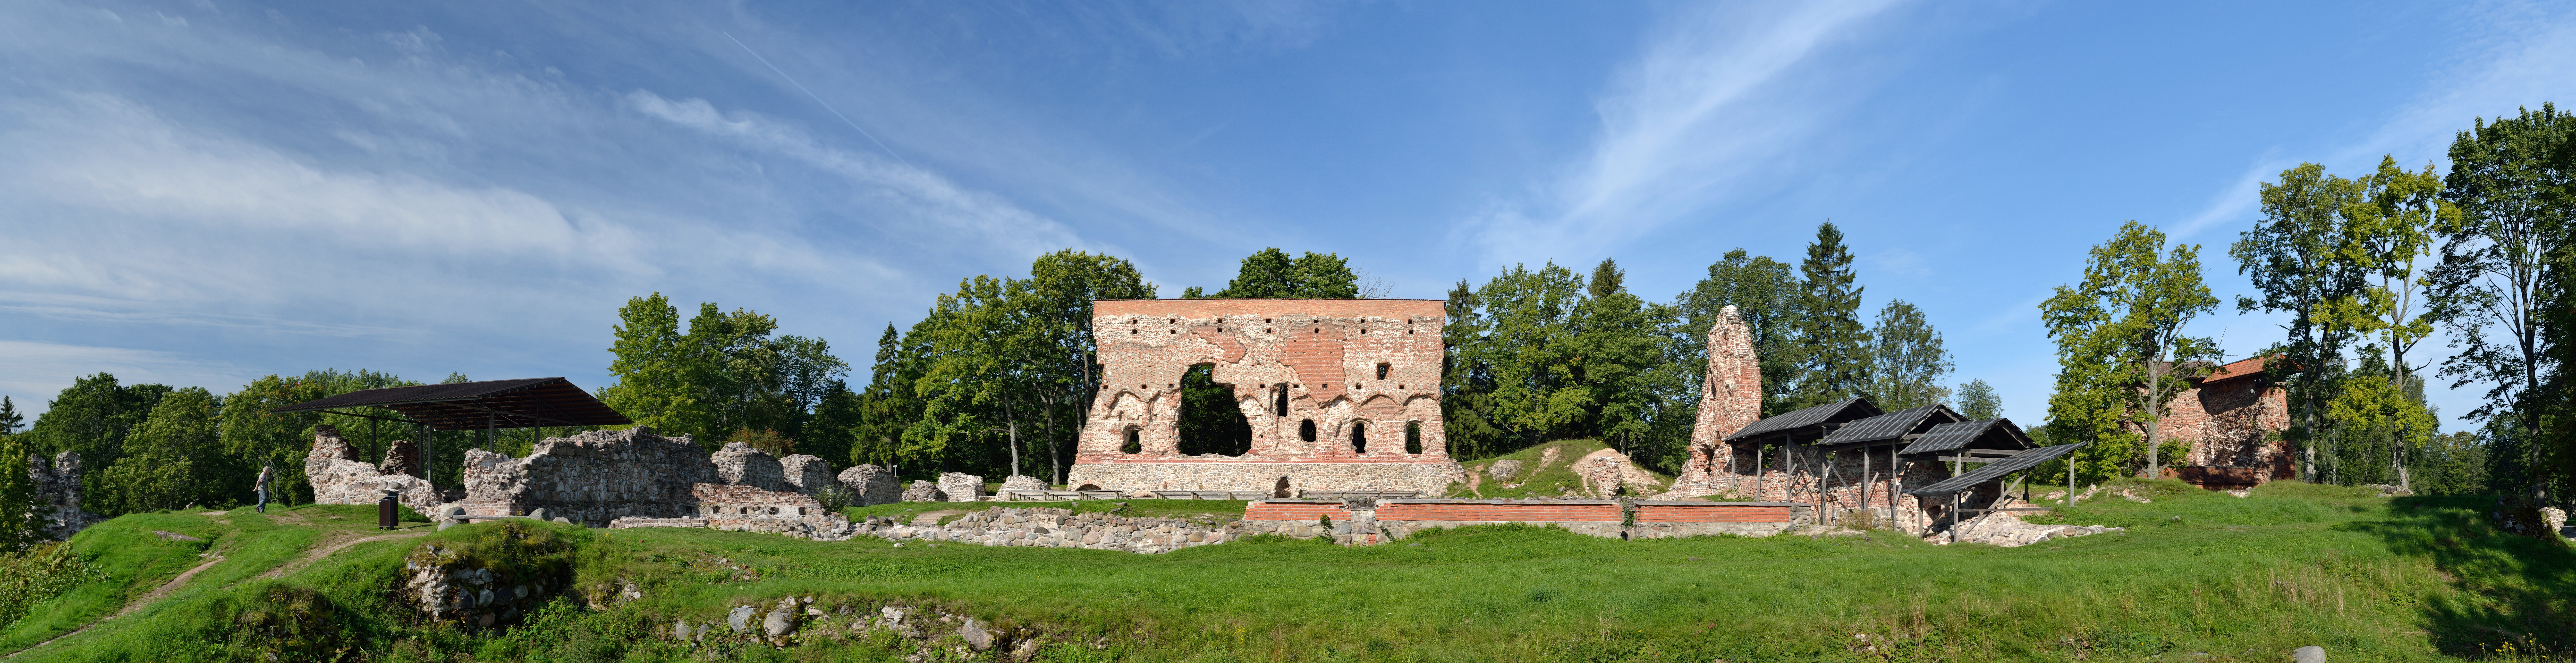 Развалины замка Вильянди 